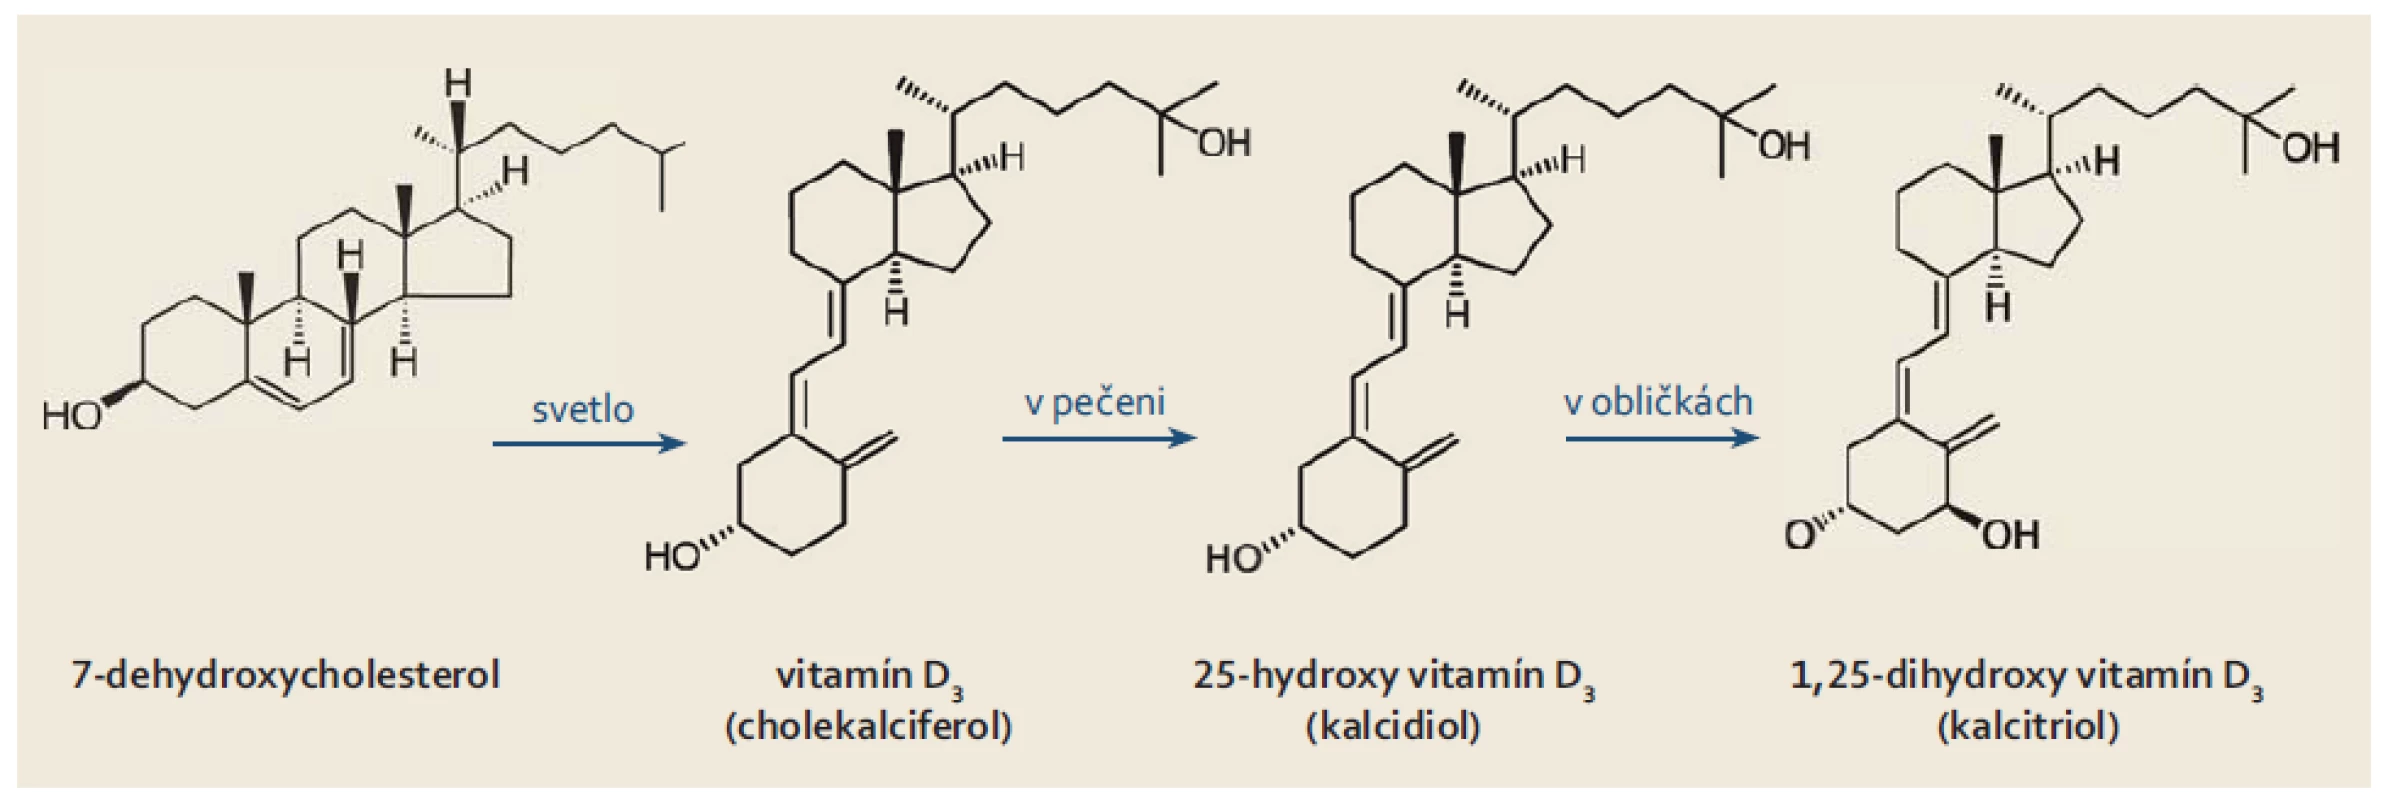 Metabolické zmeny vitamínu D – syntéza vitamínu D&lt;sub&gt;3&lt;/sub&gt; a jeho konverzia na aktívnu formu kalcitriol.
Fig. 1. Metabolic changes of vitamin D – synthesis of vitamin D&lt;sub&gt;3&lt;/sub&gt; and its conversion to the active form calcitriol.